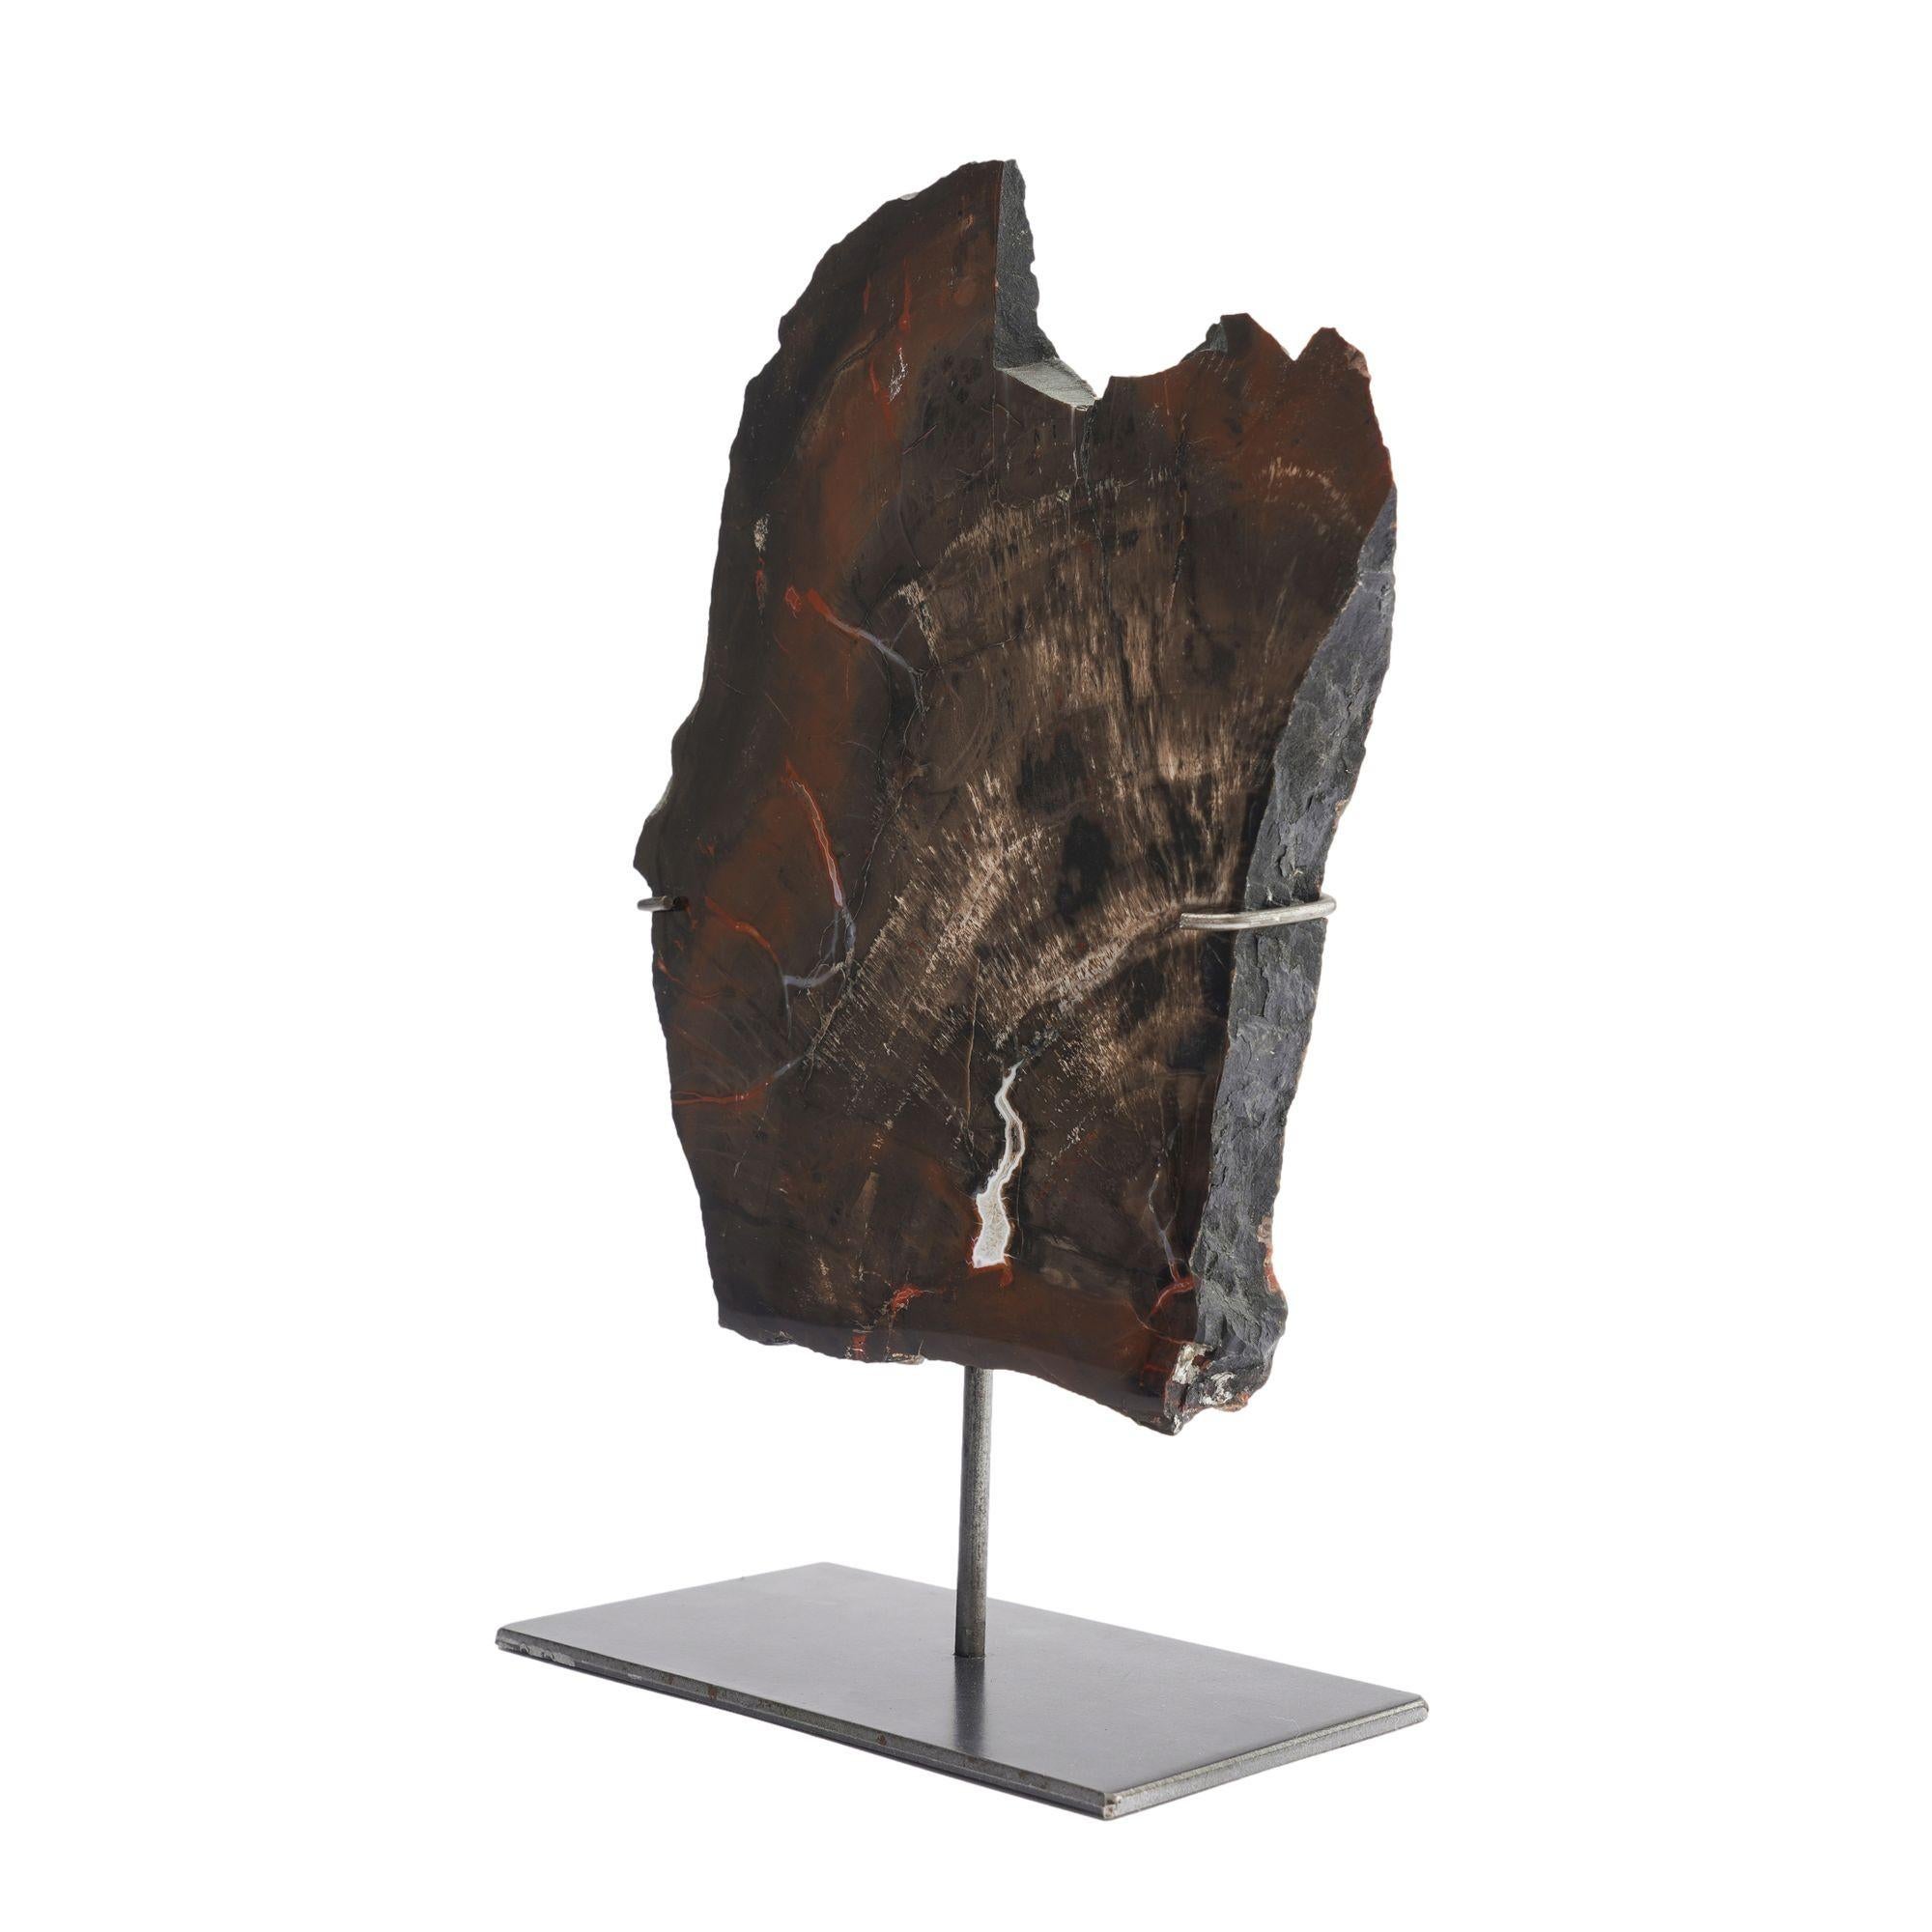 Slice cut and polished geological specimen of Southwestern American petrified wood.